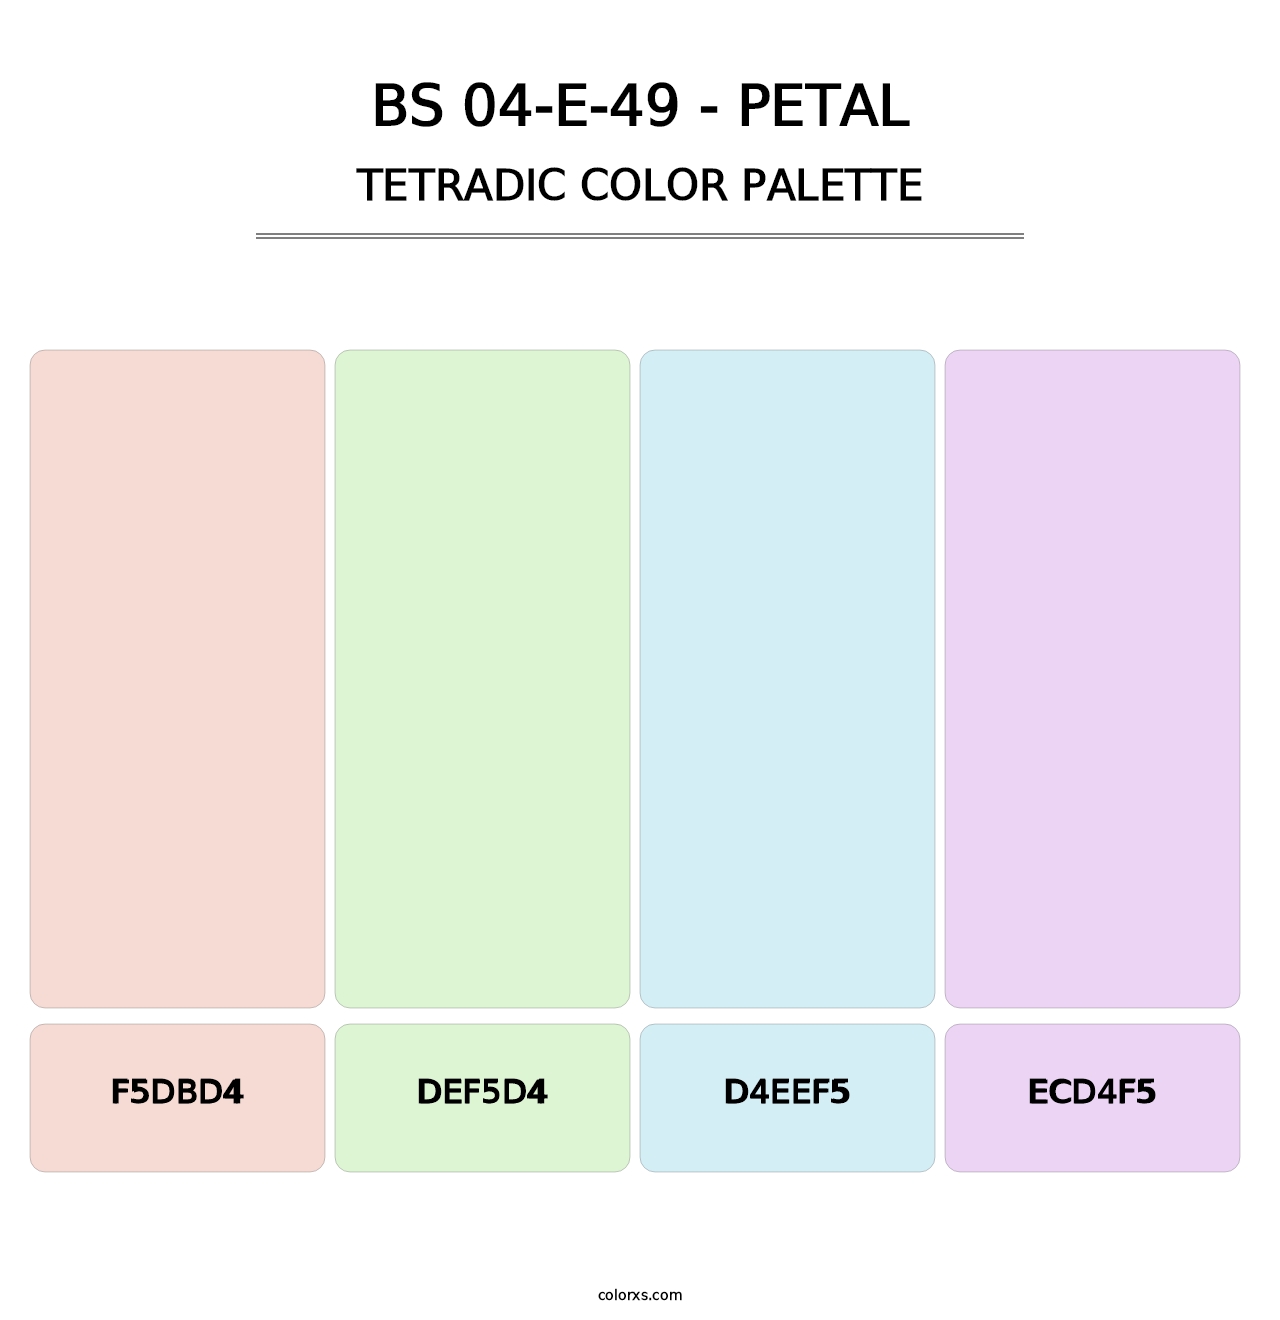 BS 04-E-49 - Petal - Tetradic Color Palette